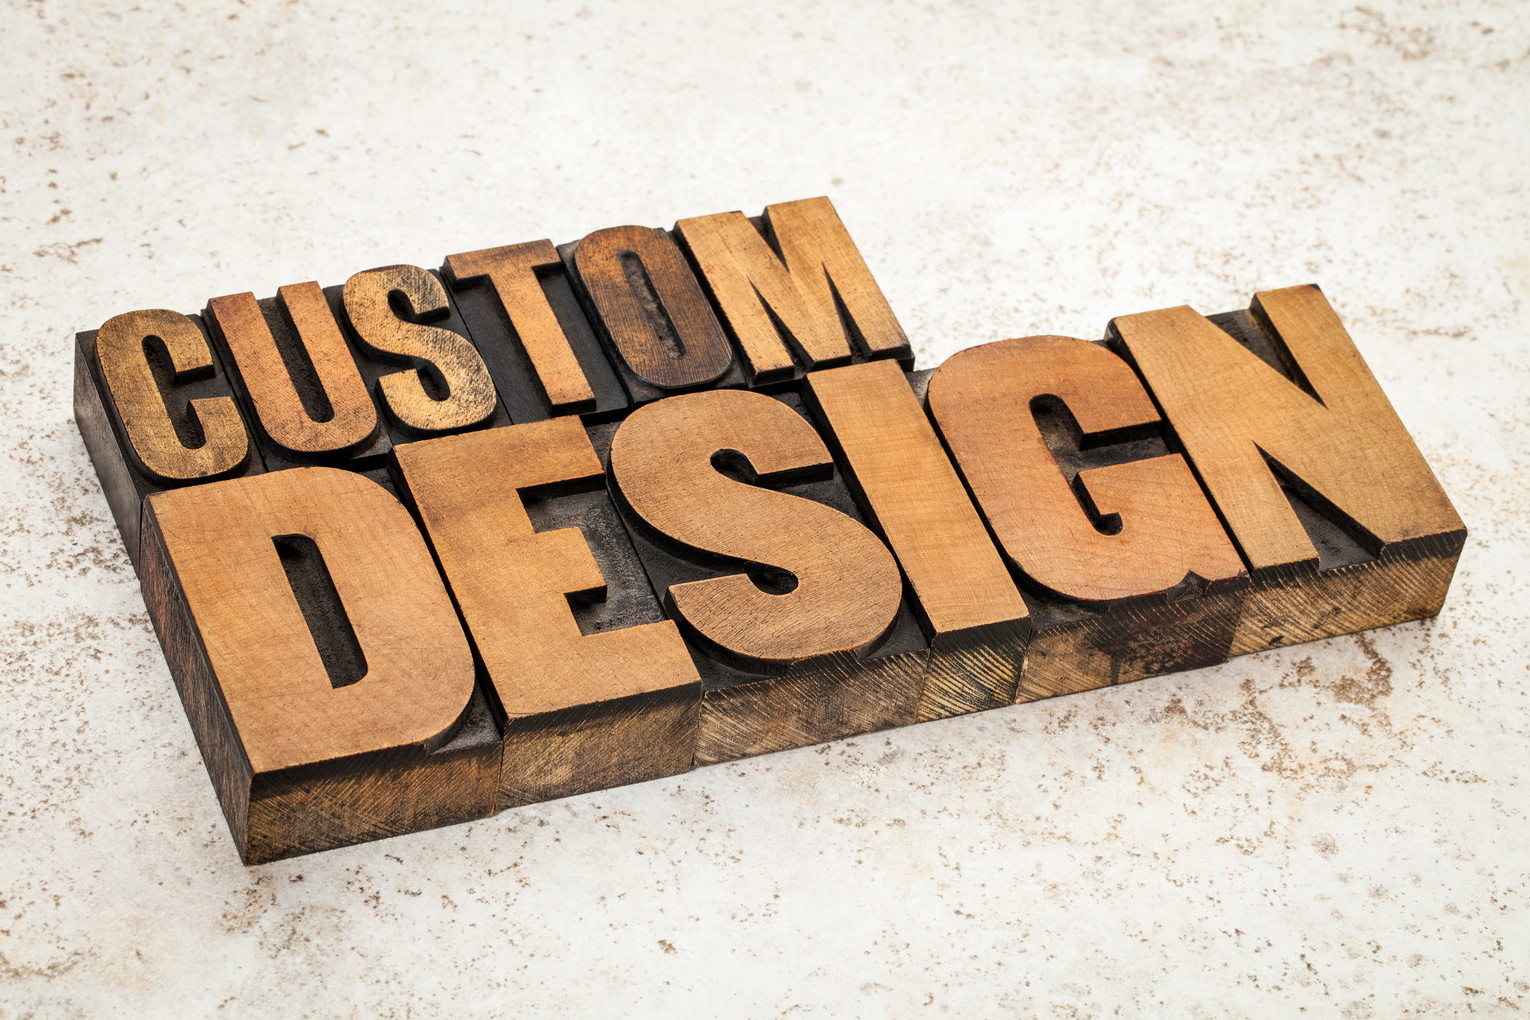 custom design in wood type